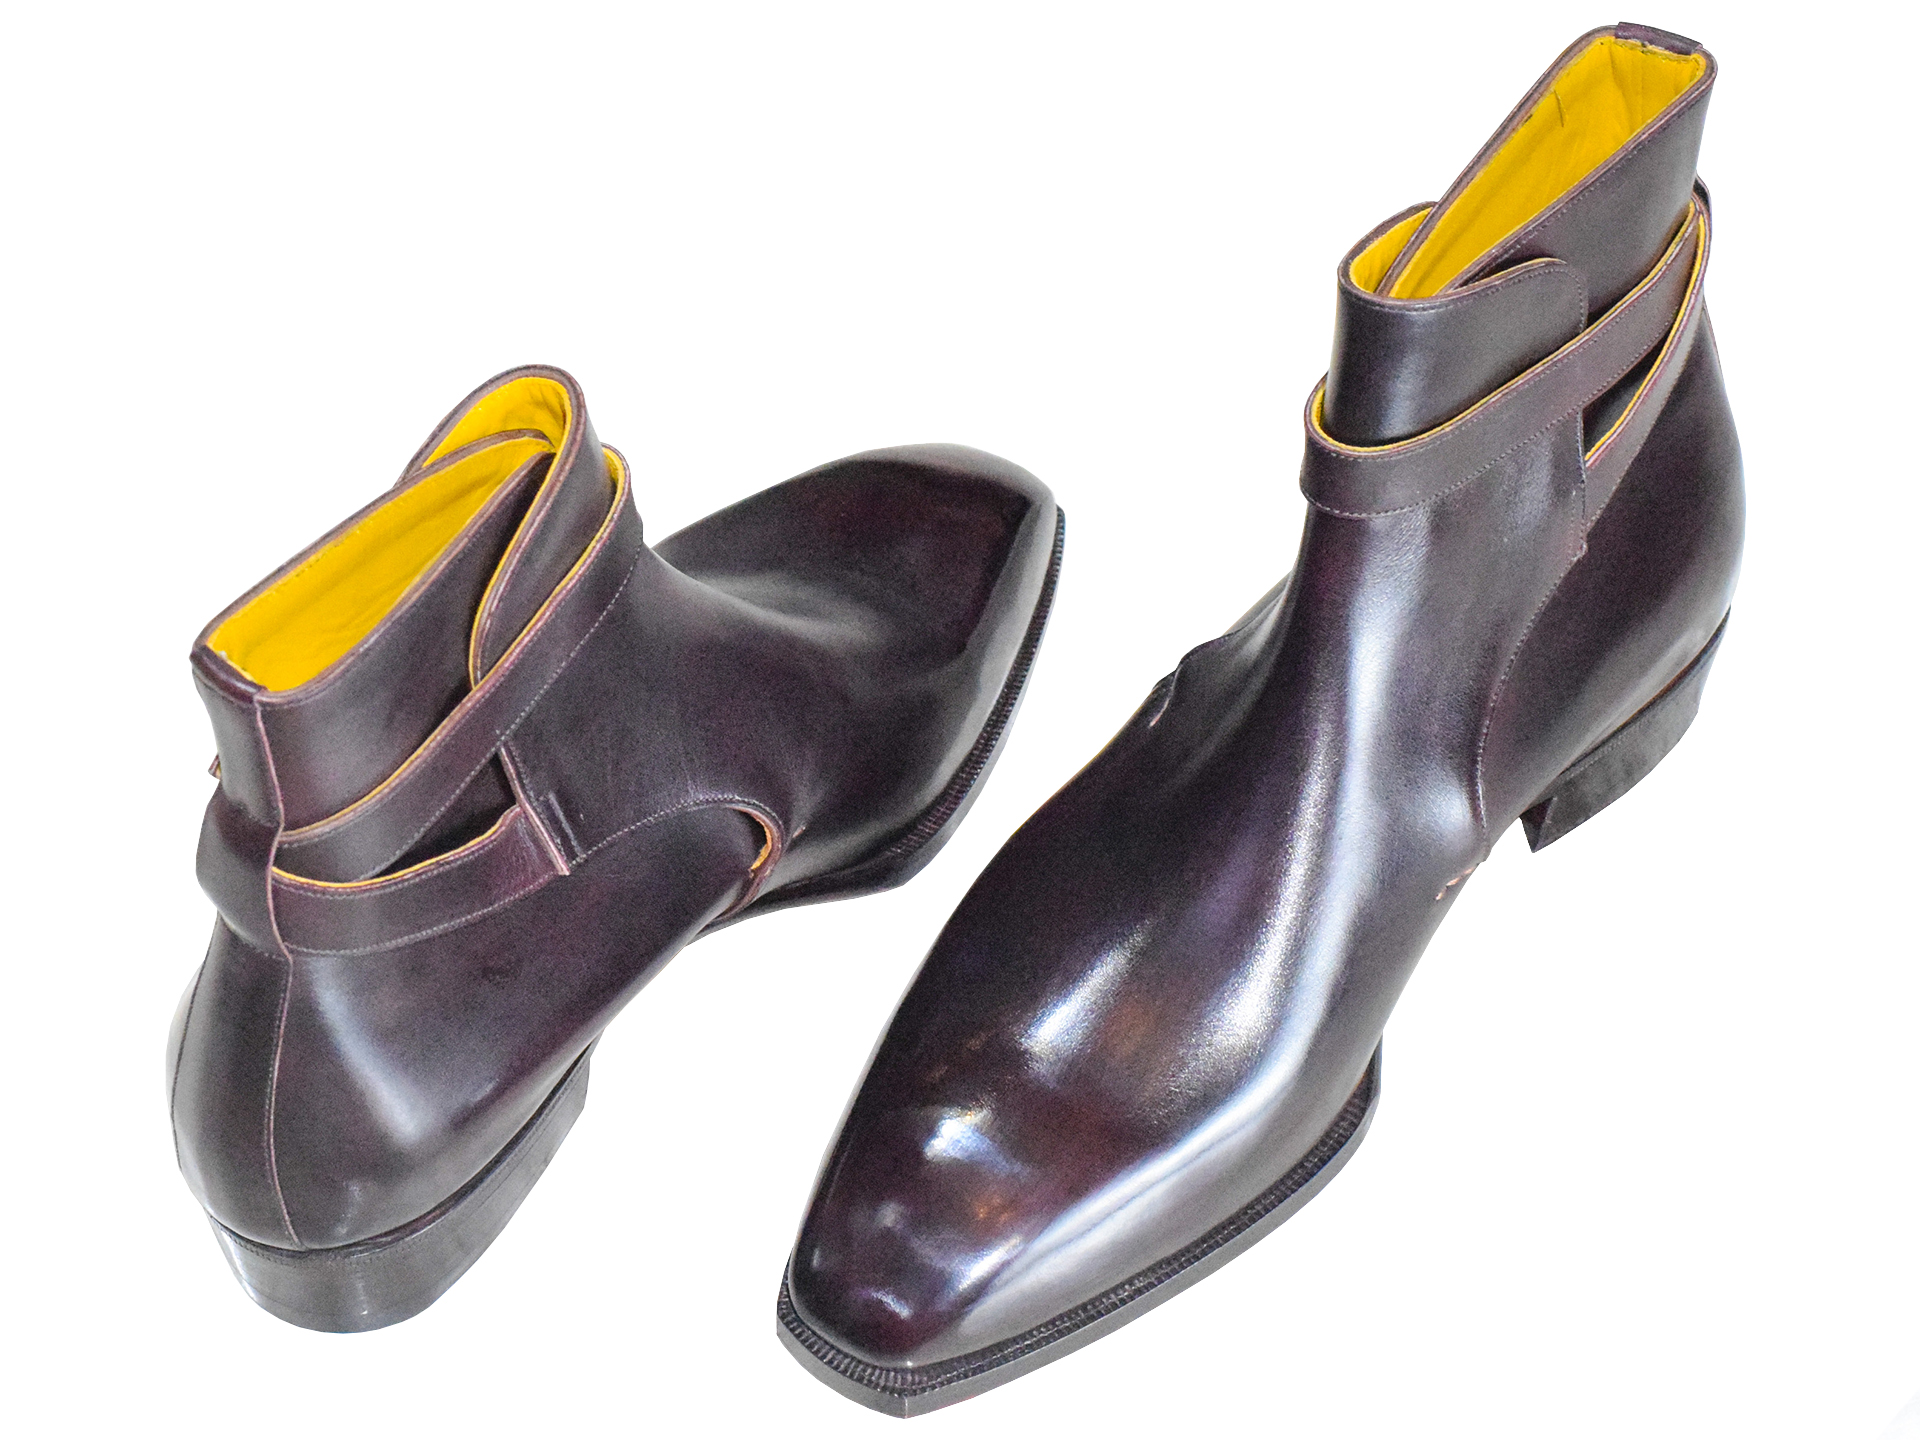 MTO Jodhpur Boots - Premium line